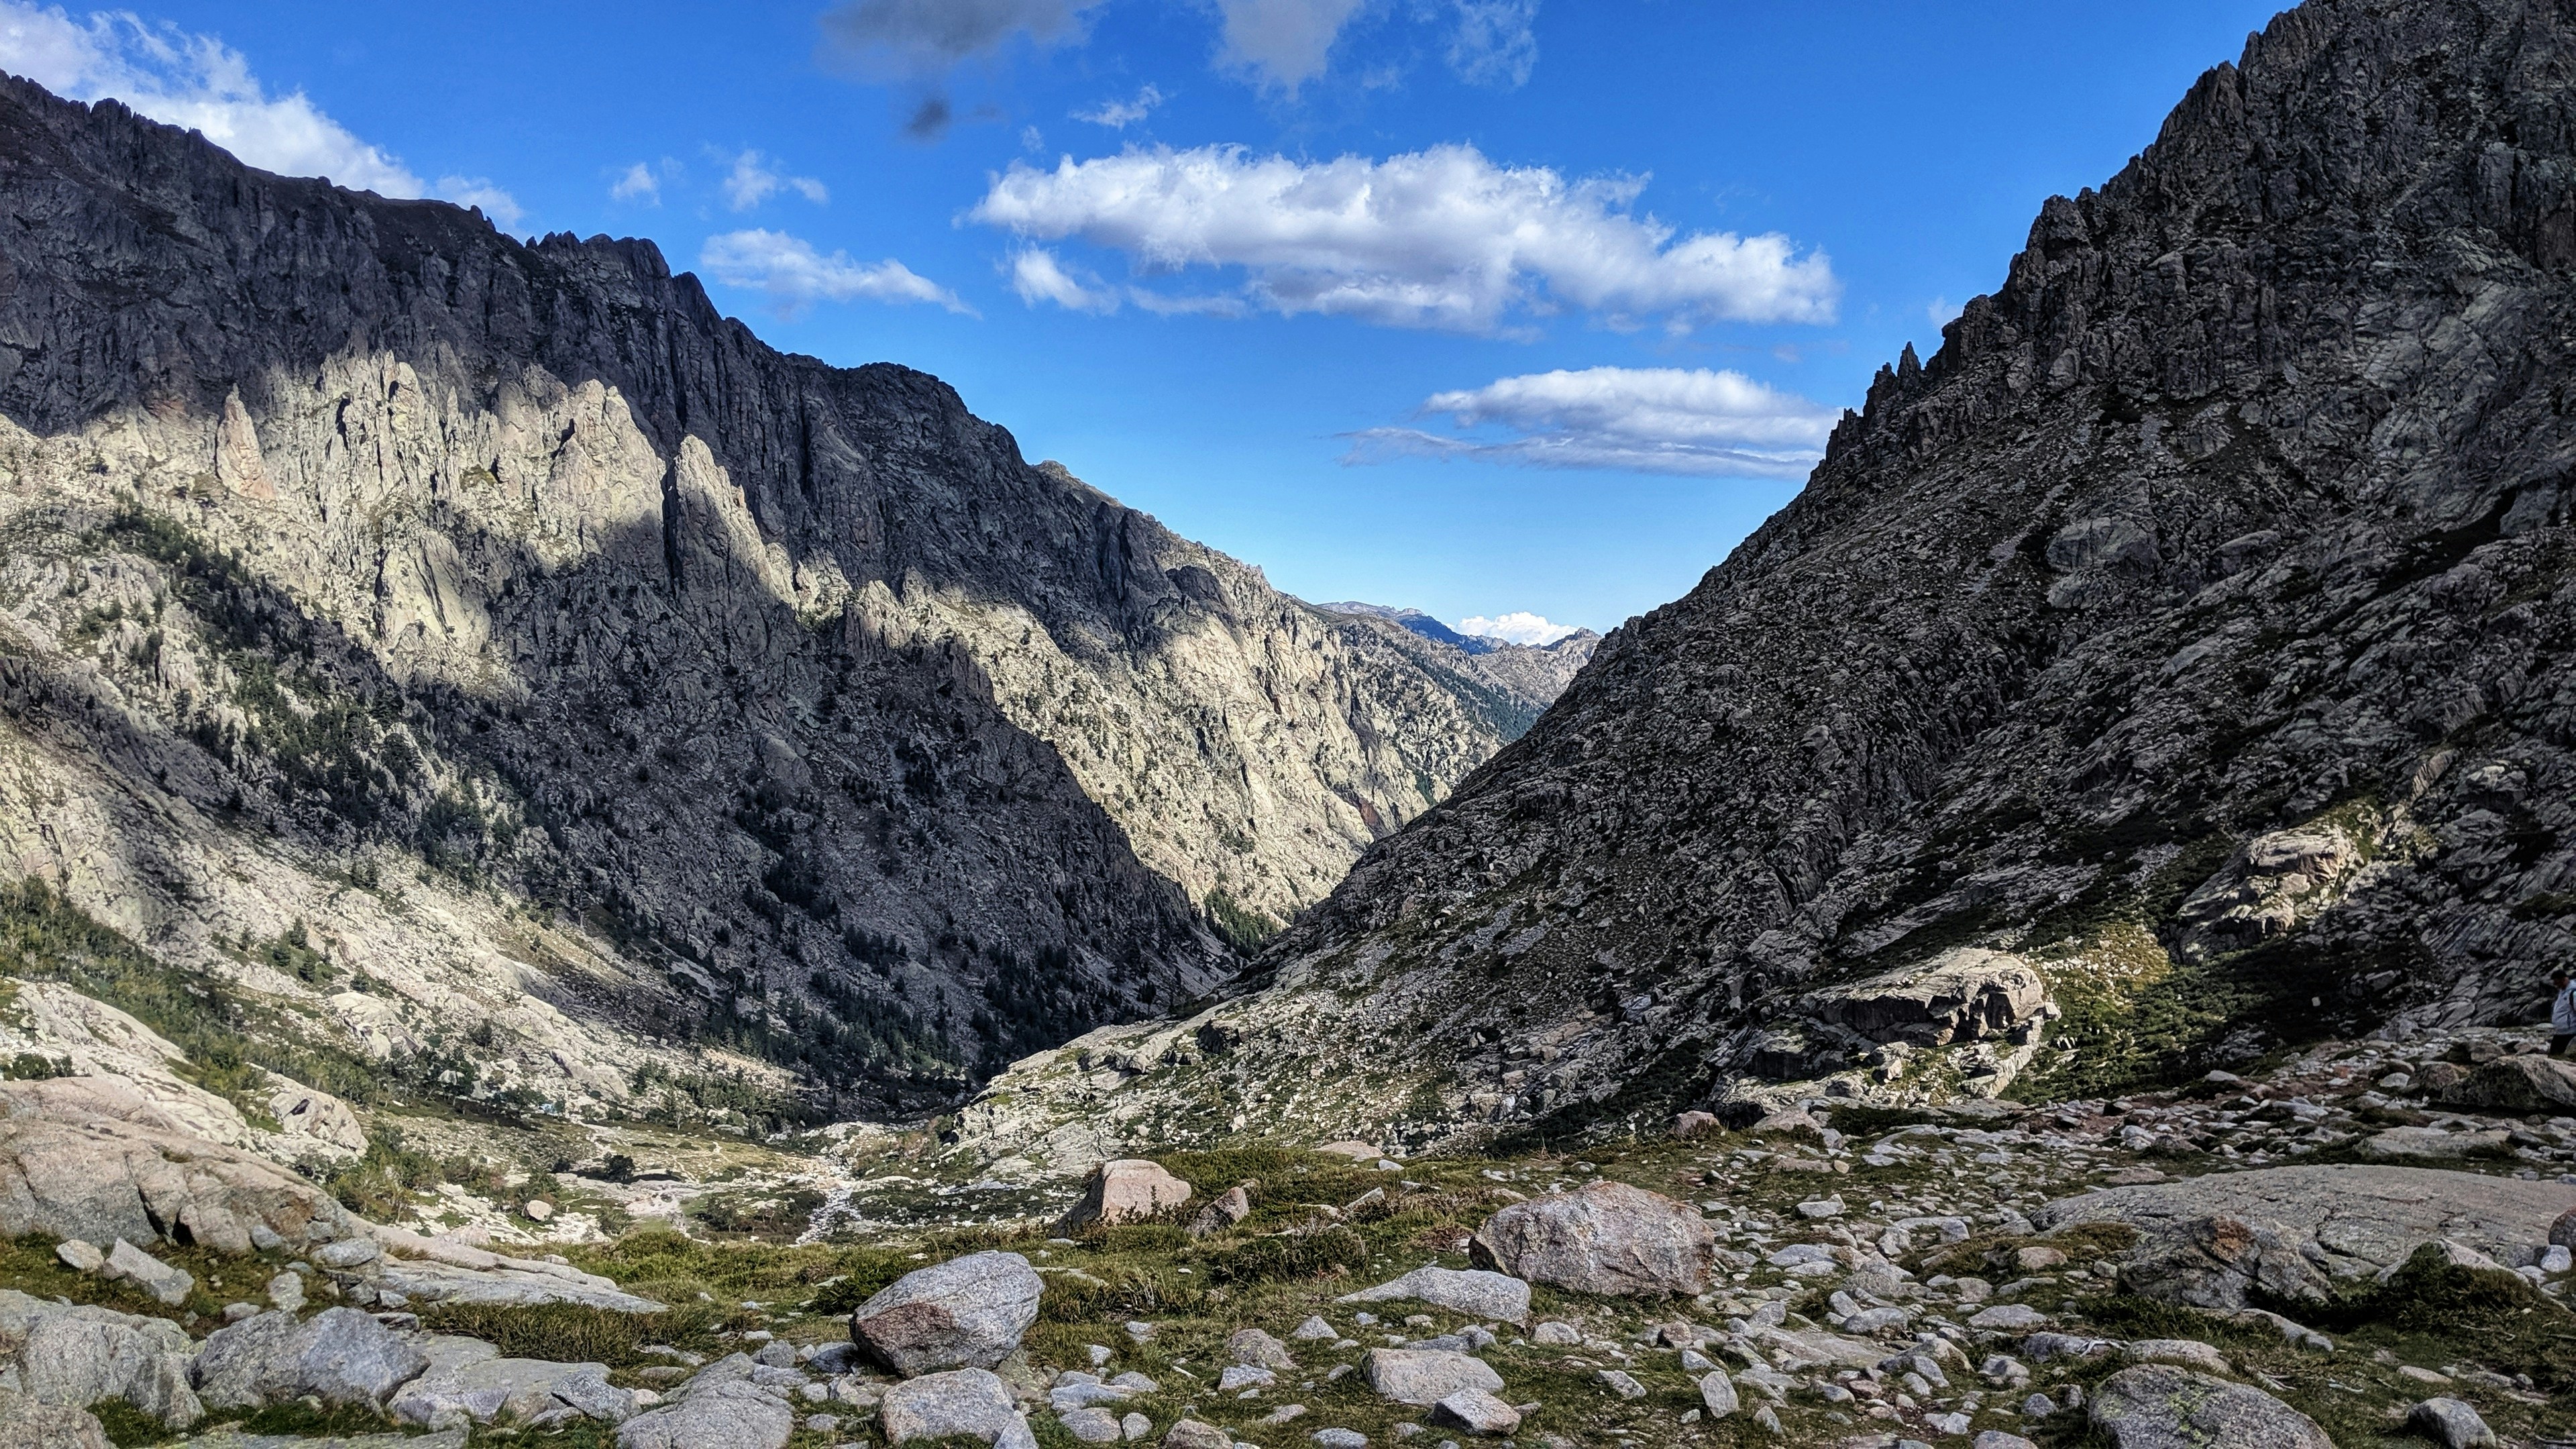 The mountain views across Corsica National Park near Lac de Melu